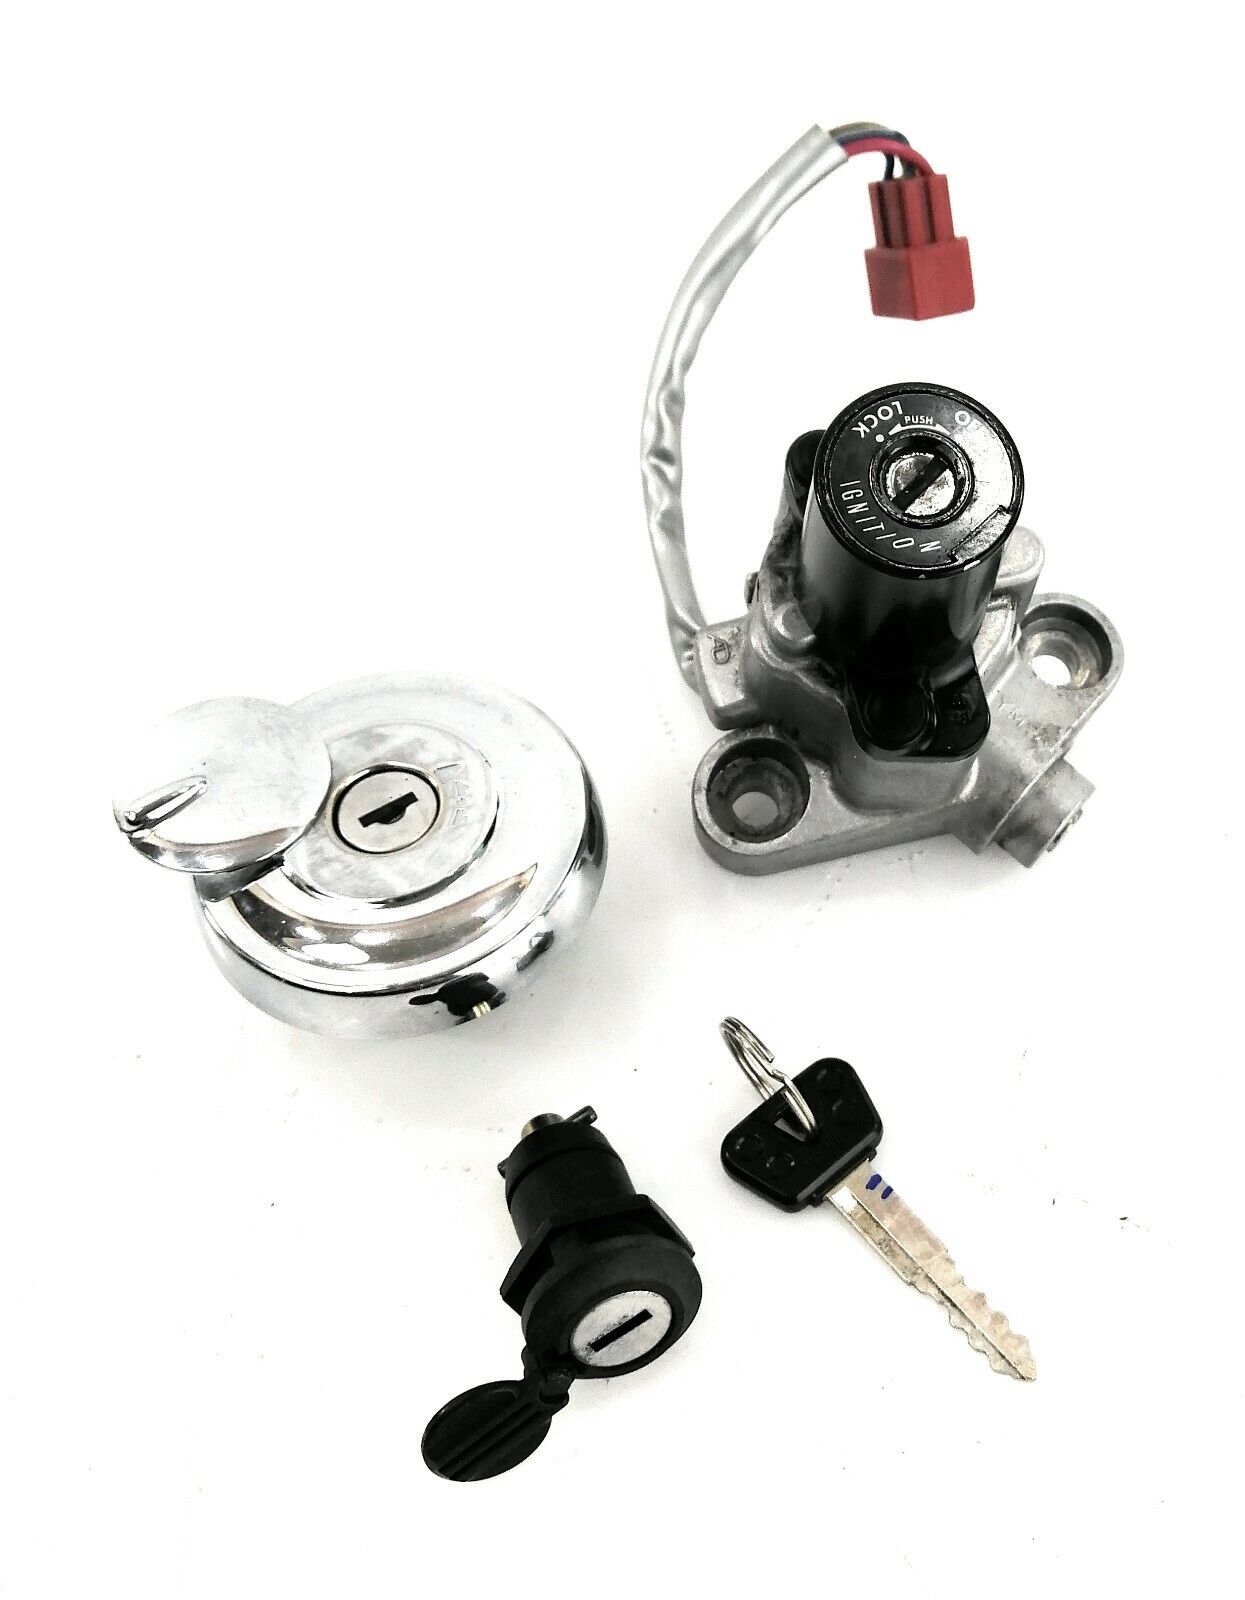 1998-2016 Yamaha V Star 650 Ignition Switch Gas Cap Tool Lock Set Matching Key